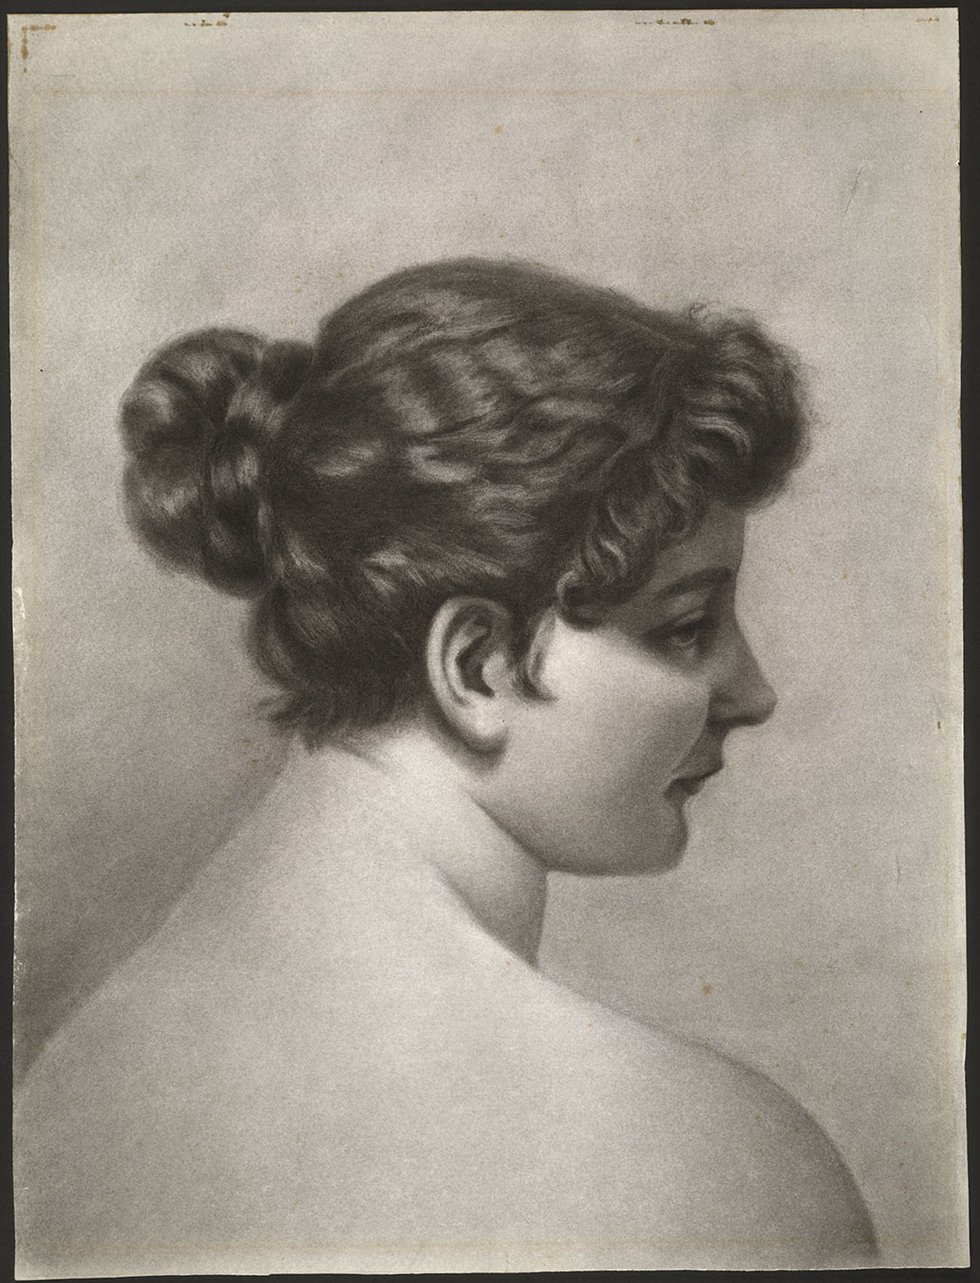 Emily Carr, "Self-Portrait," circa 1899